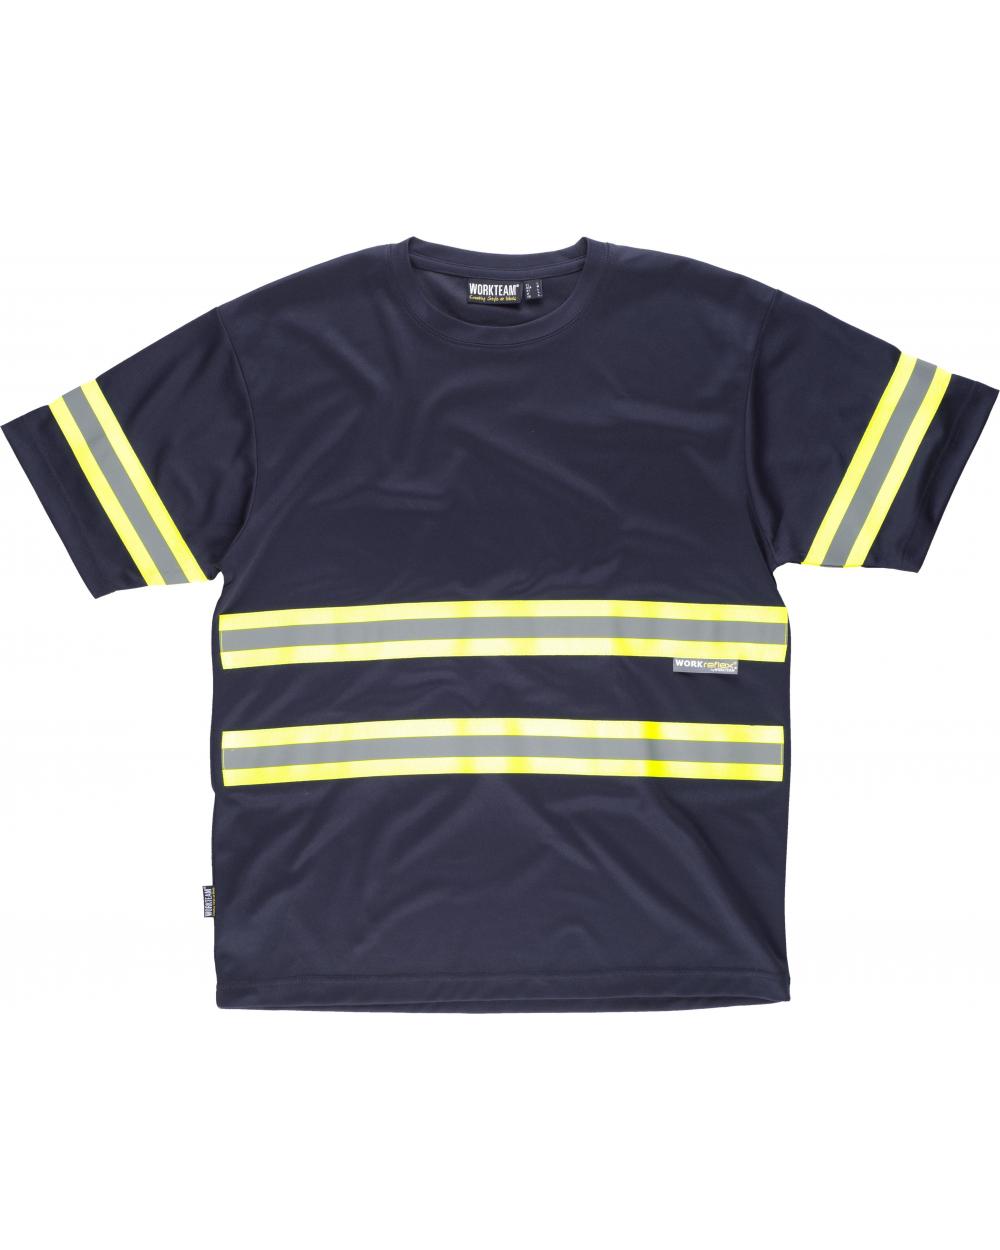 Comprar Camiseta con cintas fluorescentes C3936 Marino+Amarillo AV workteam delante